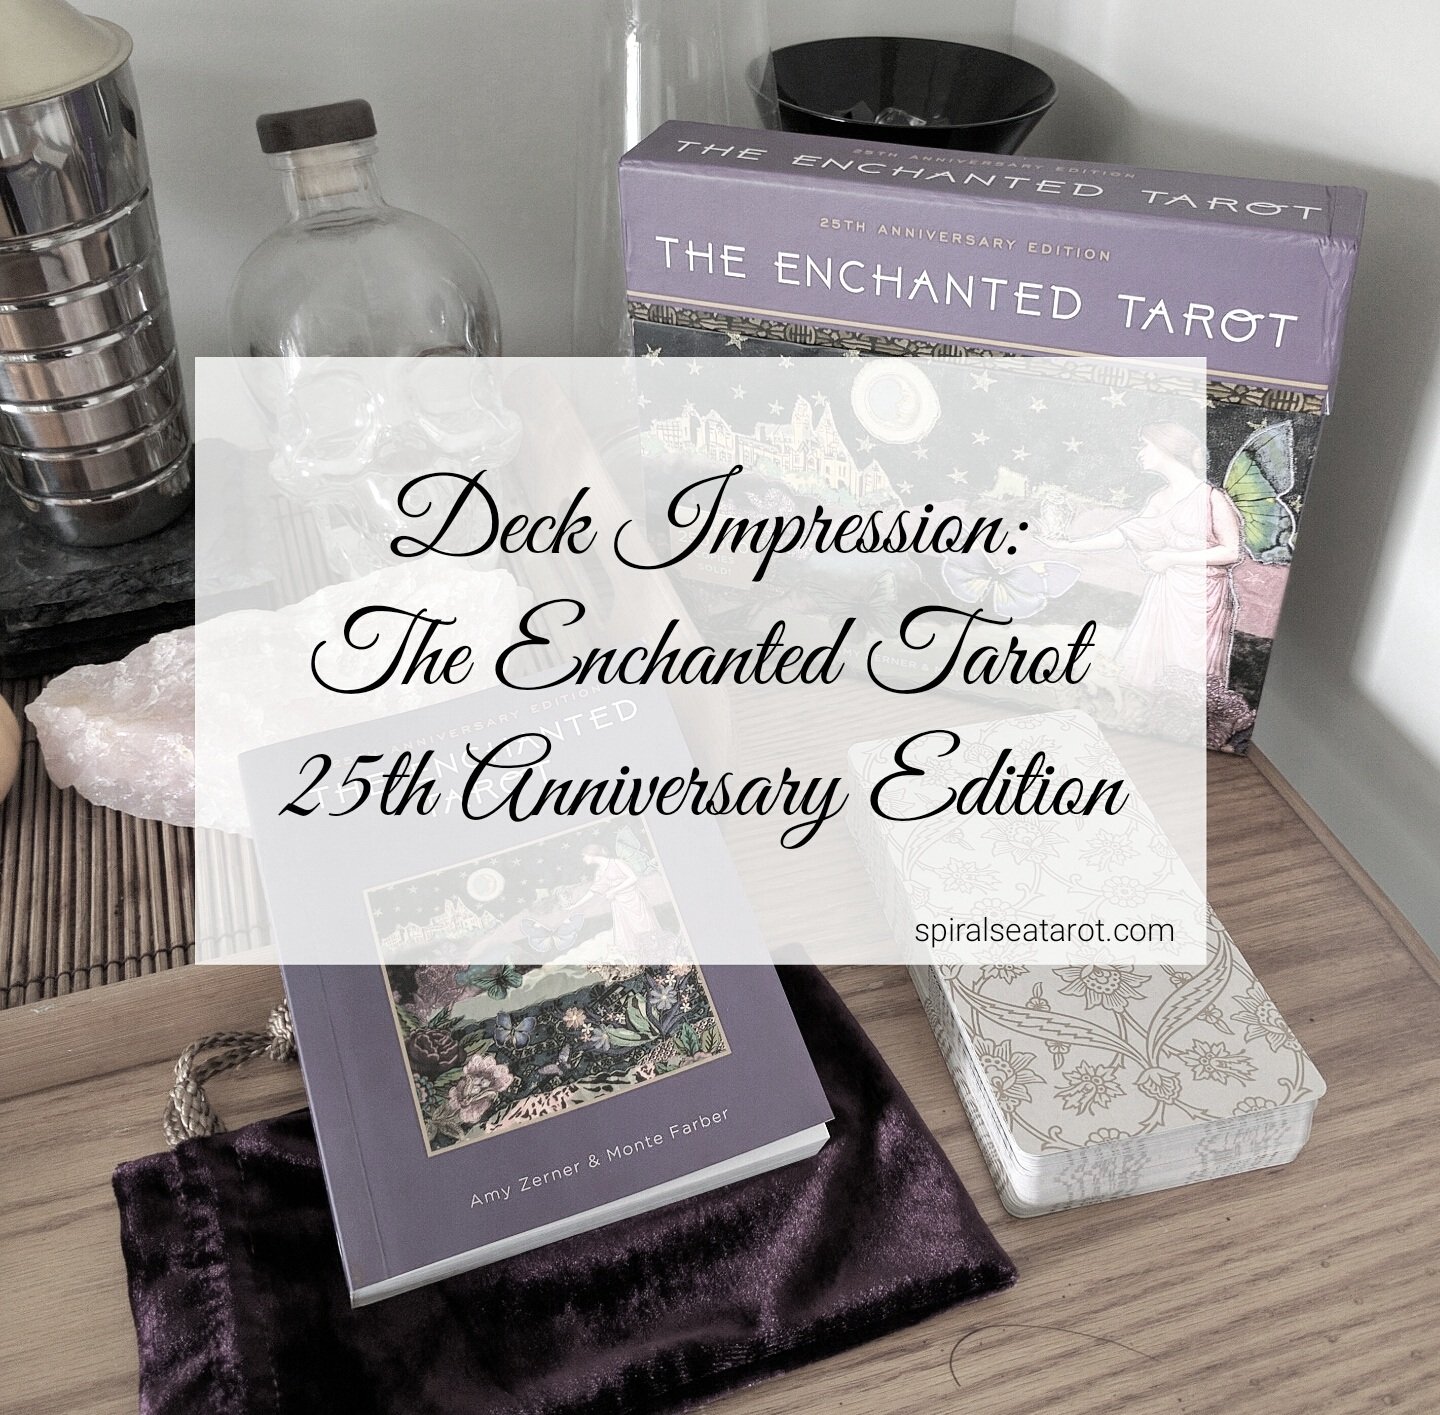 Deck Impression: The Enchanted Tarot 25th Anniversary Edition